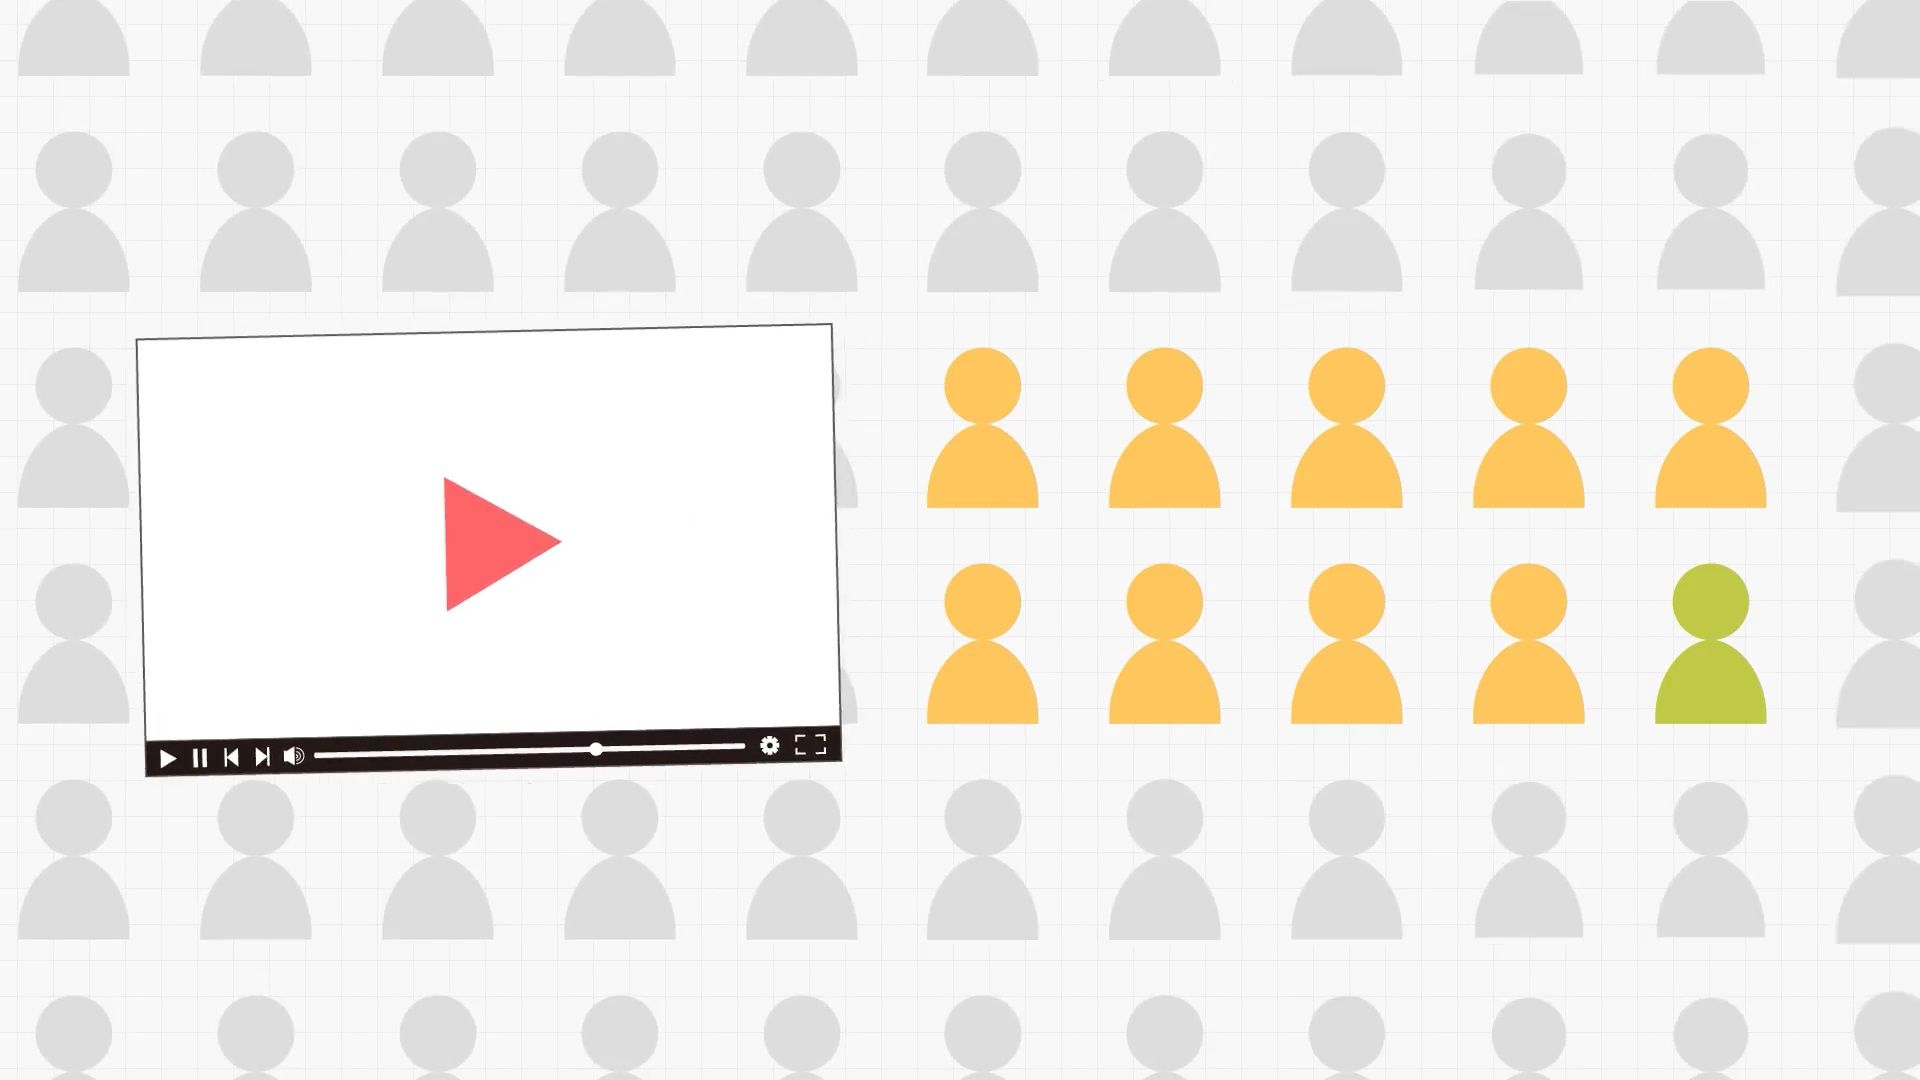 VTuber表示，YouTuber演算法若發現你的影片受歡迎，就會把你的影片推播給更多人看。